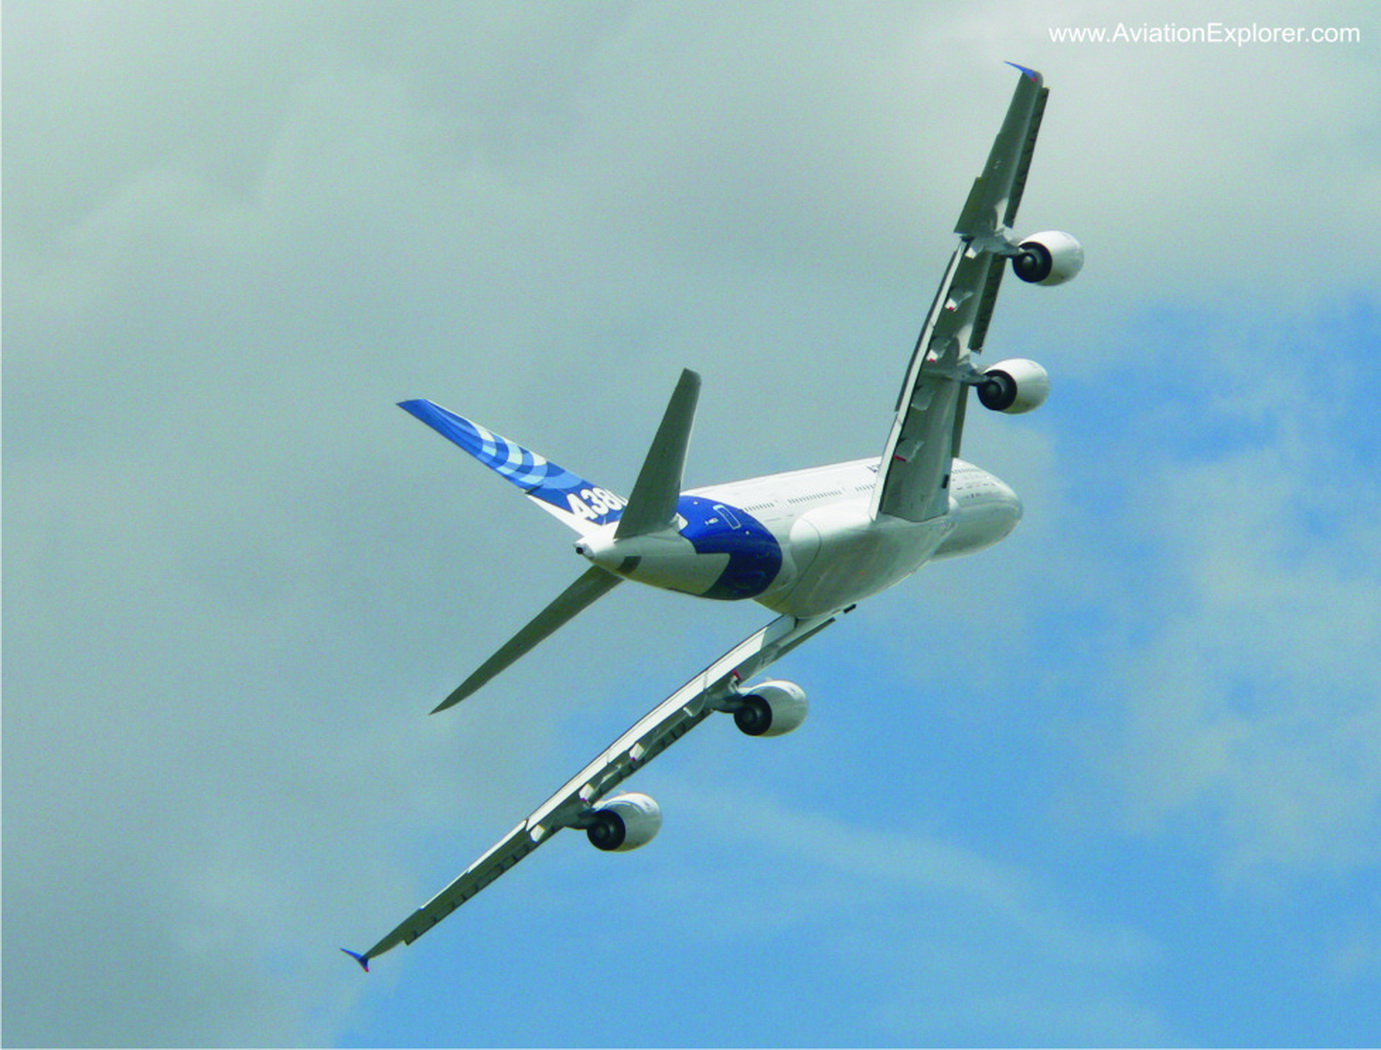 AIRBUS A380 IN FLIGHT WALLPAPER